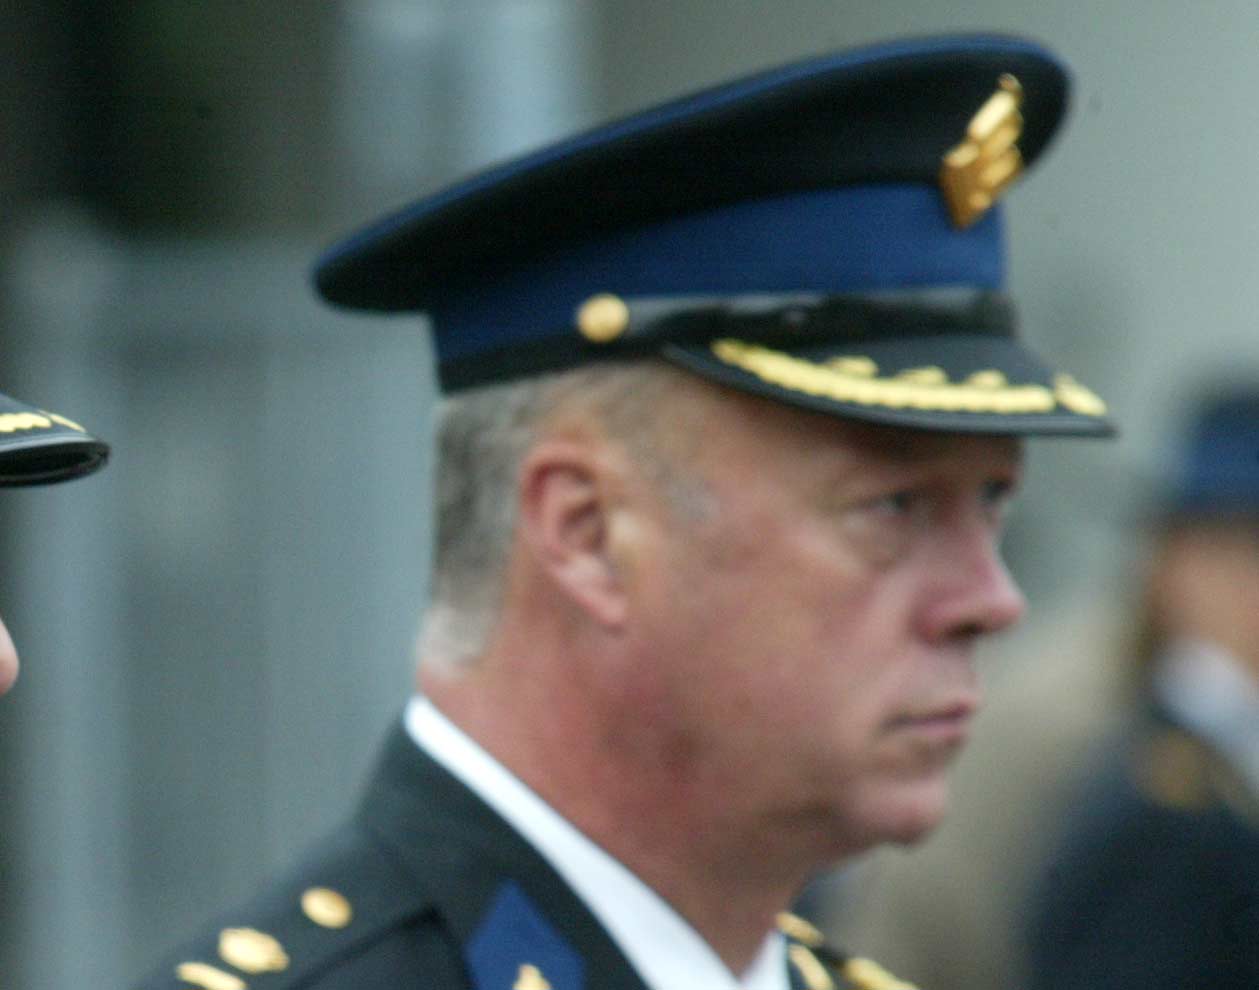 Strafontslag voor hoge politiechef Amsterdam